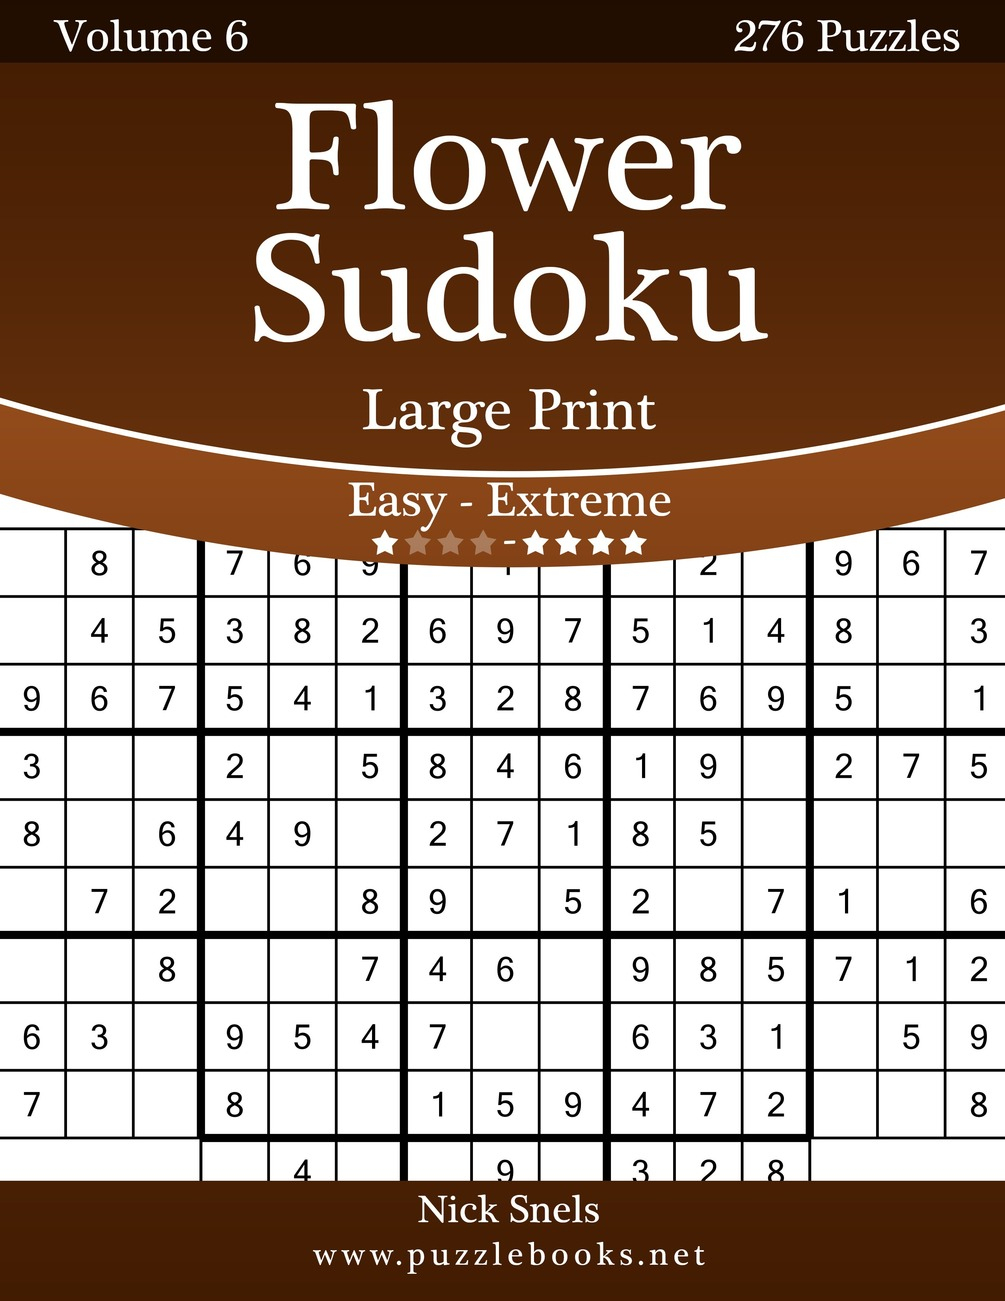 Flower Sudoku Large Print - Easy To Extreme - Volume 6 - 276 Logic Puzzles